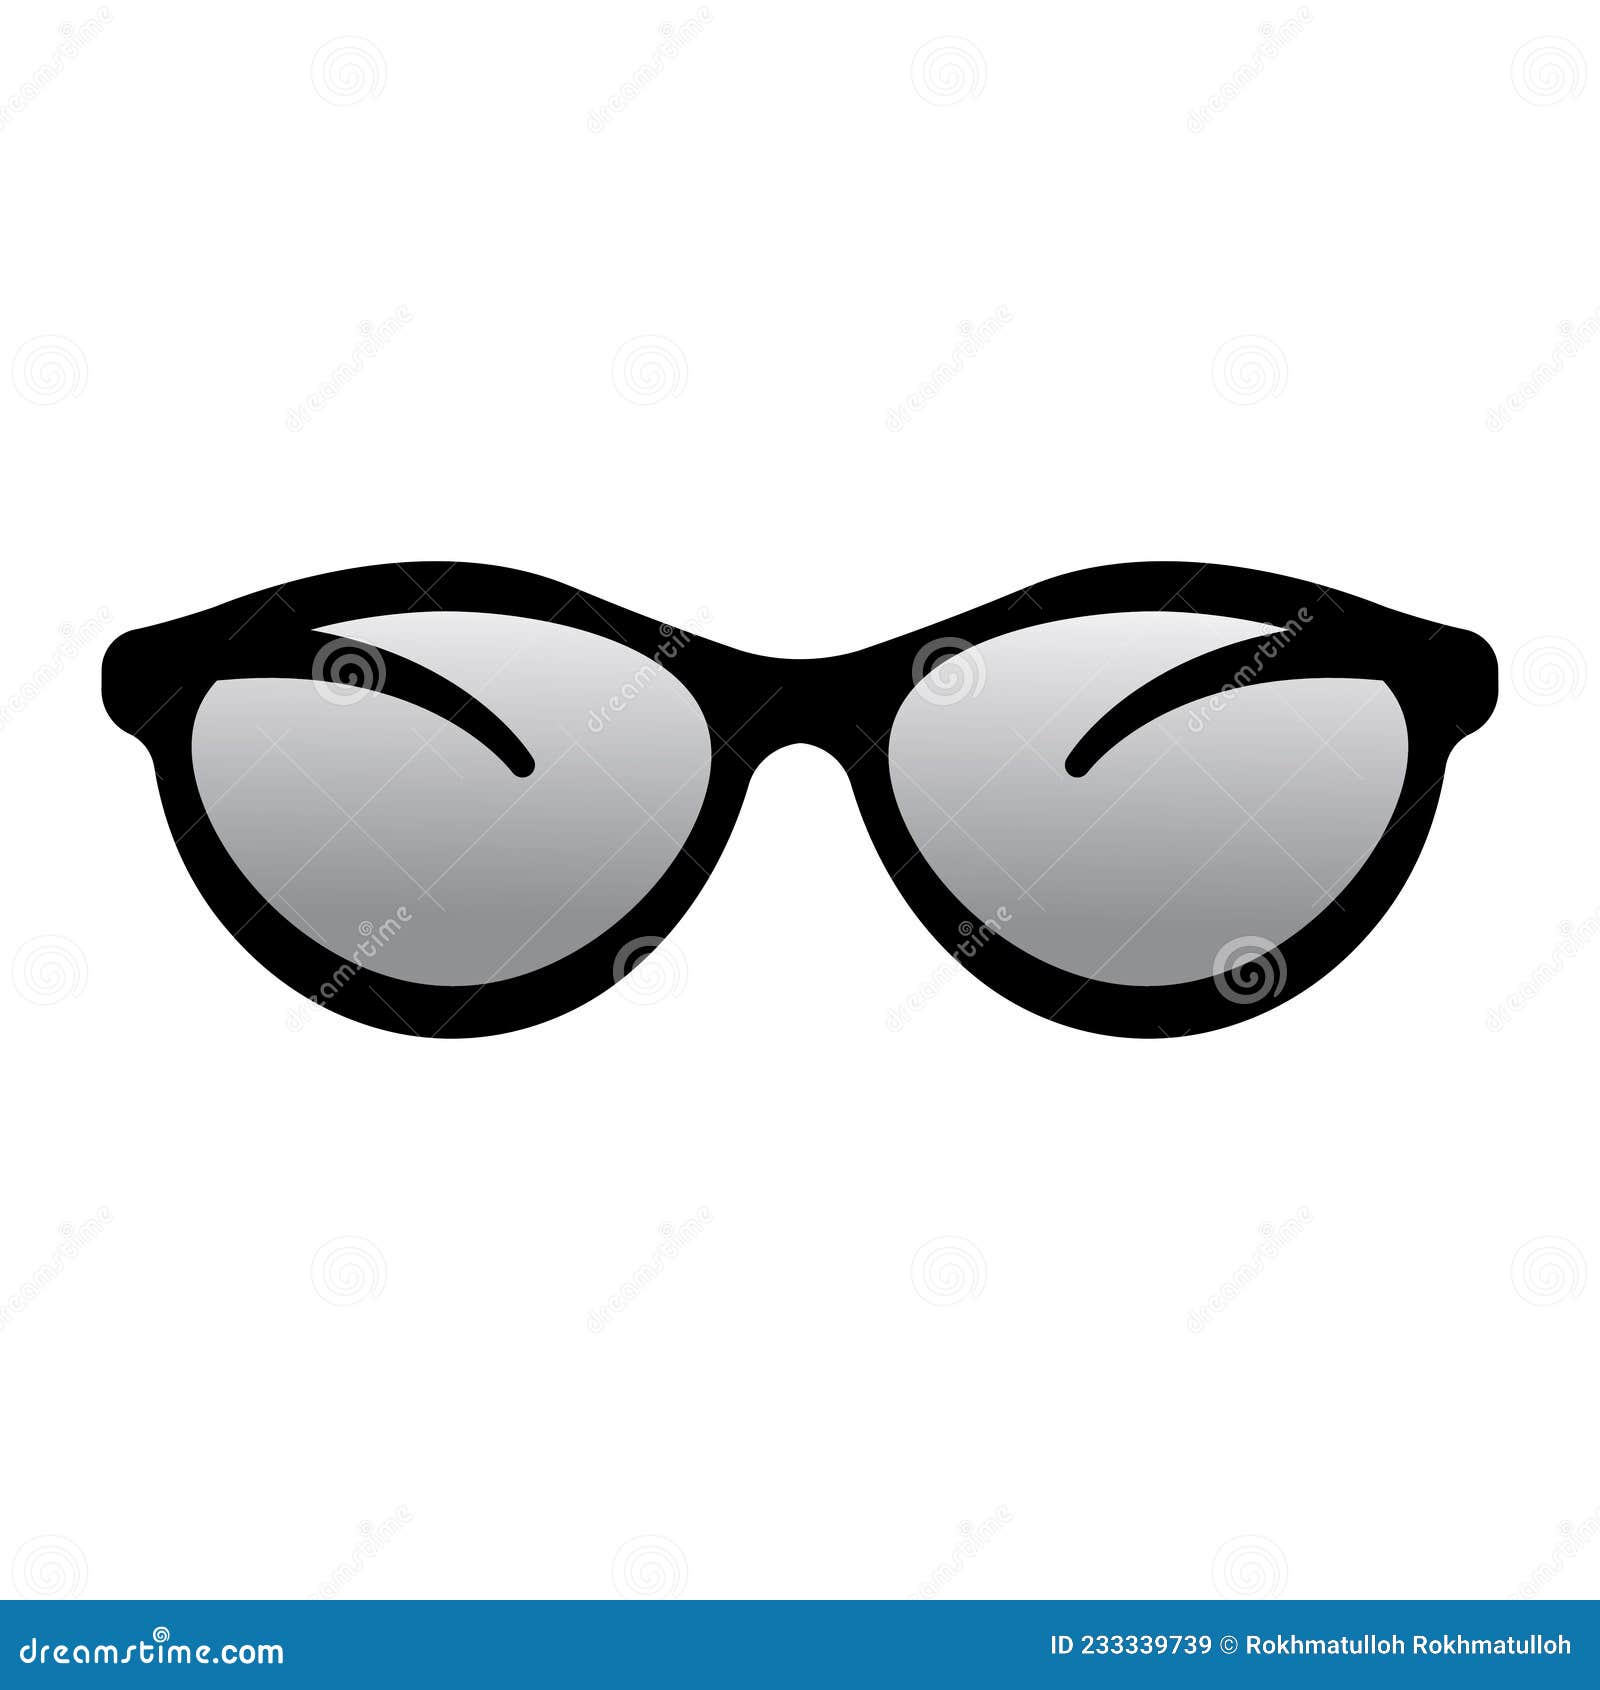 各种类型的眼镜图标 13 pairs of vector eyeglasses_UI社